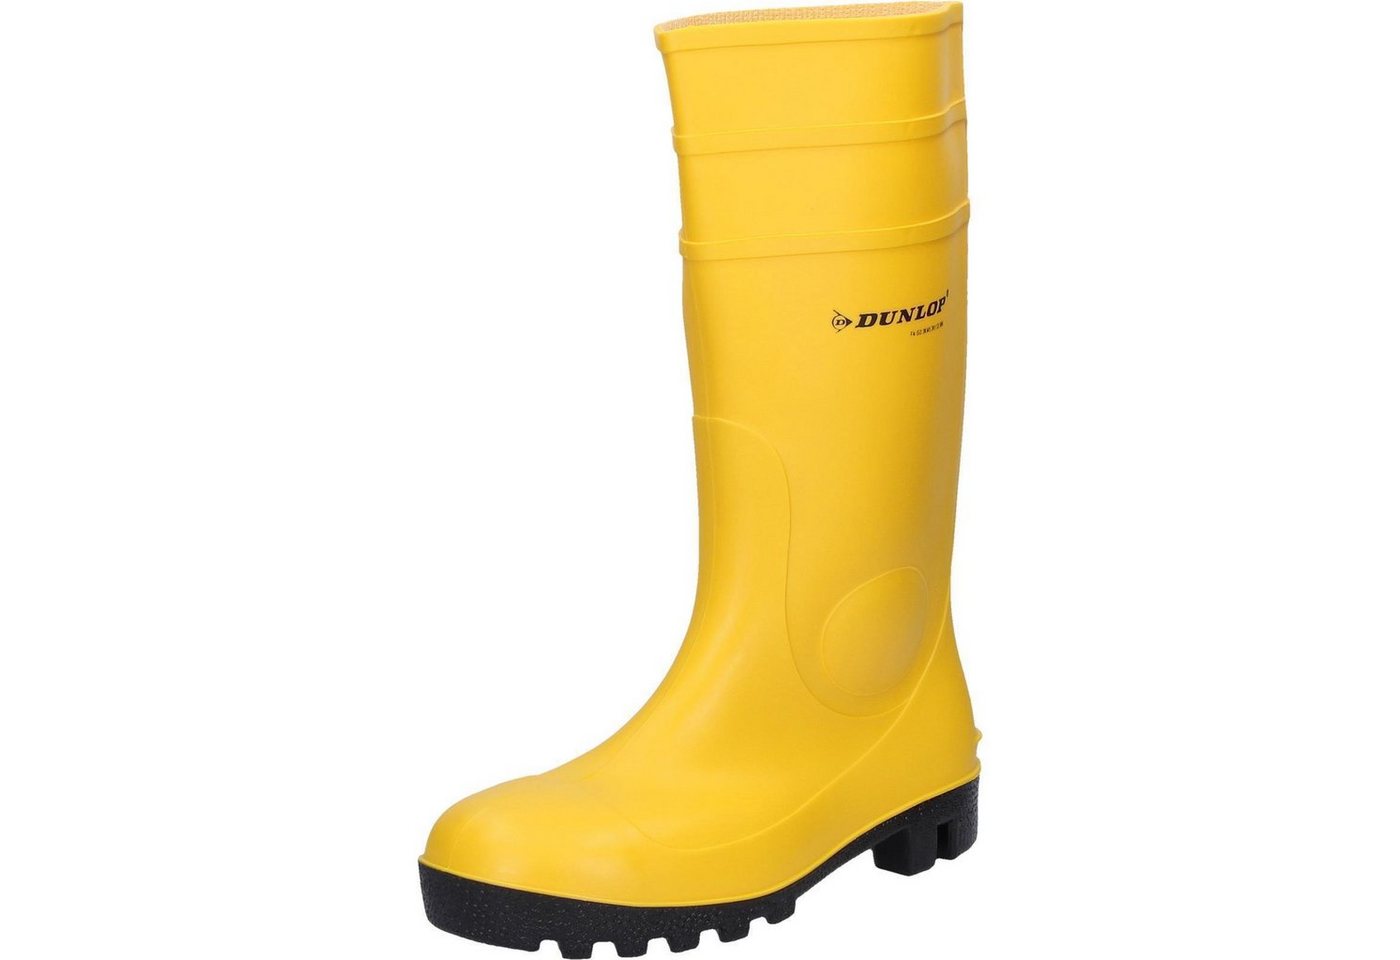 Dunlop_Workwear Stiefel Protomaster gelb S5 Sicherheitsstiefel von Dunlop_Workwear